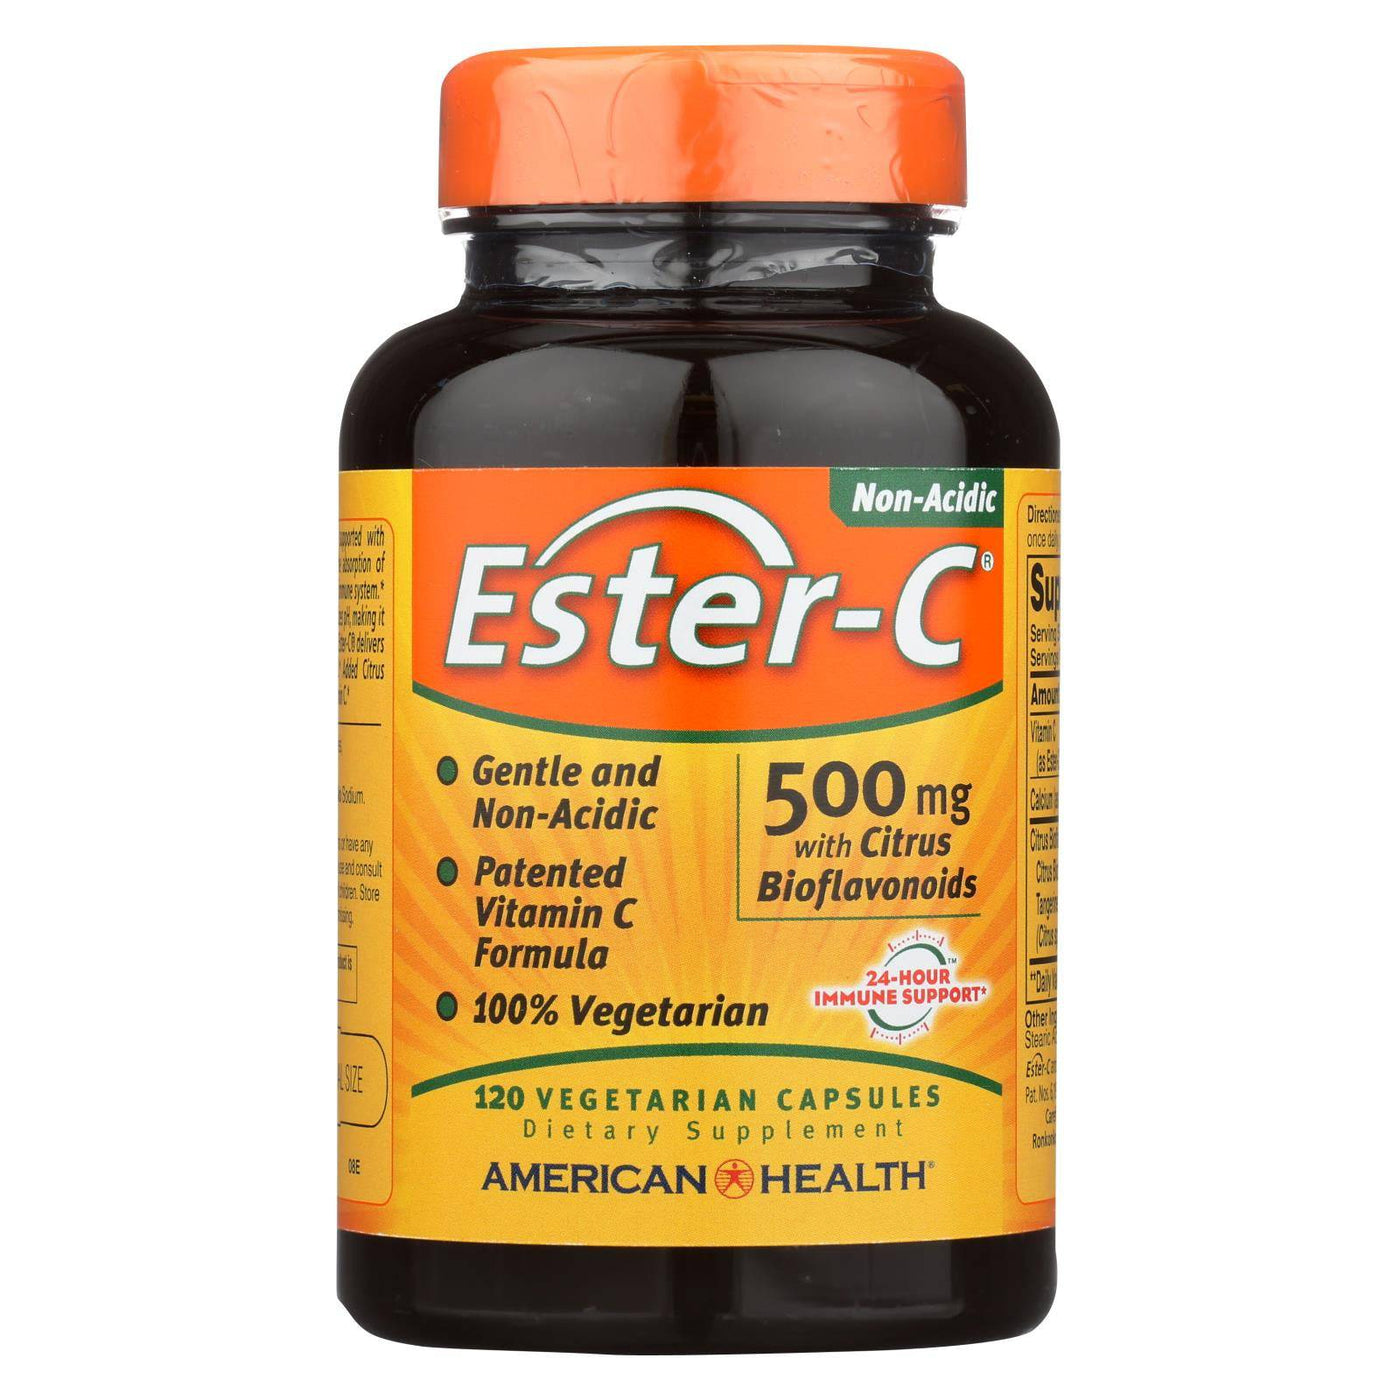 Buy American Health - Ester-c With Citrus Bioflavonoids - 500 Mg - 120 Vegetarian Capsules  at OnlyNaturals.us